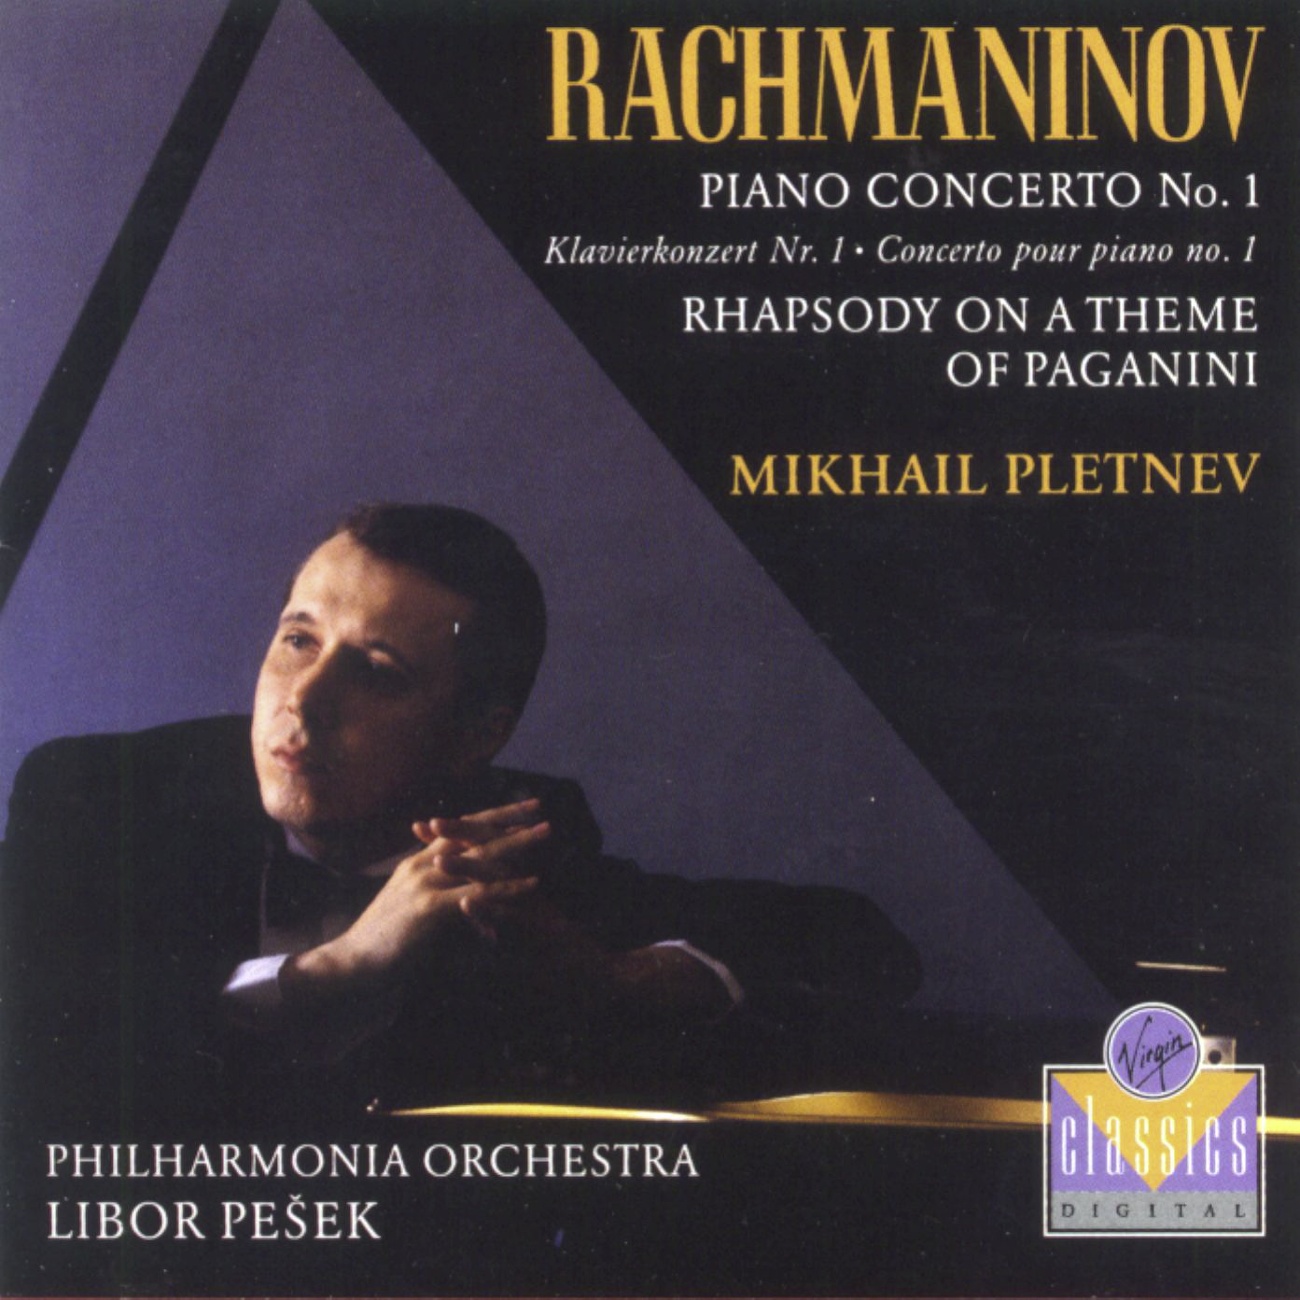 Rhapsody on a Theme of Paganini: Variation II - L'istesso tempo